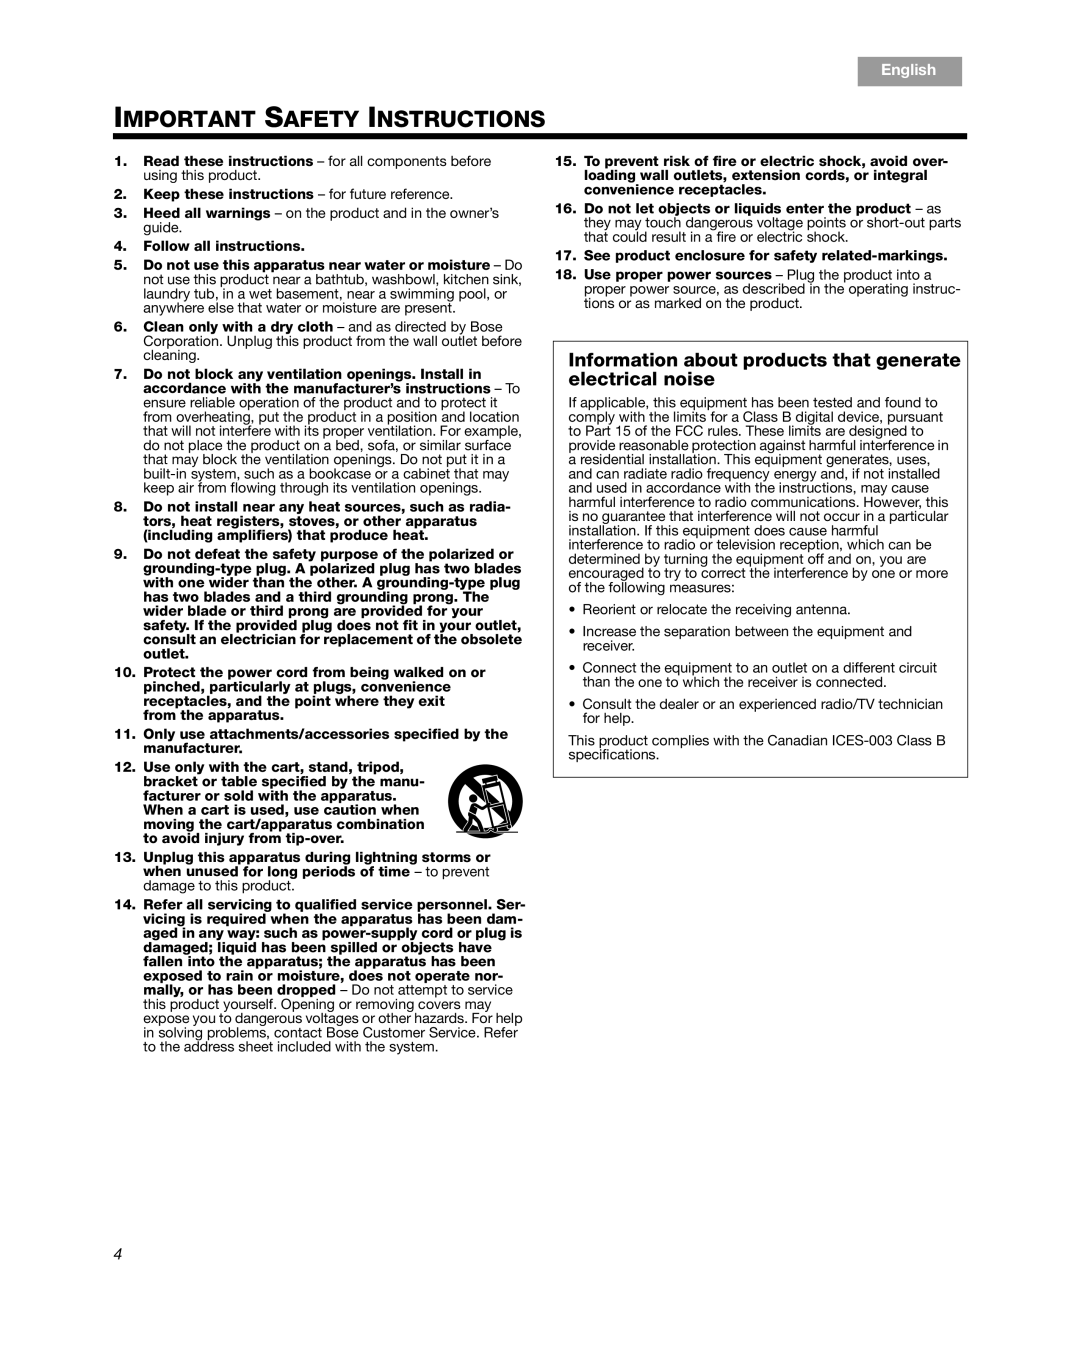 Bose Companion 5 manual Important Safety Instructions, Français Español, English 